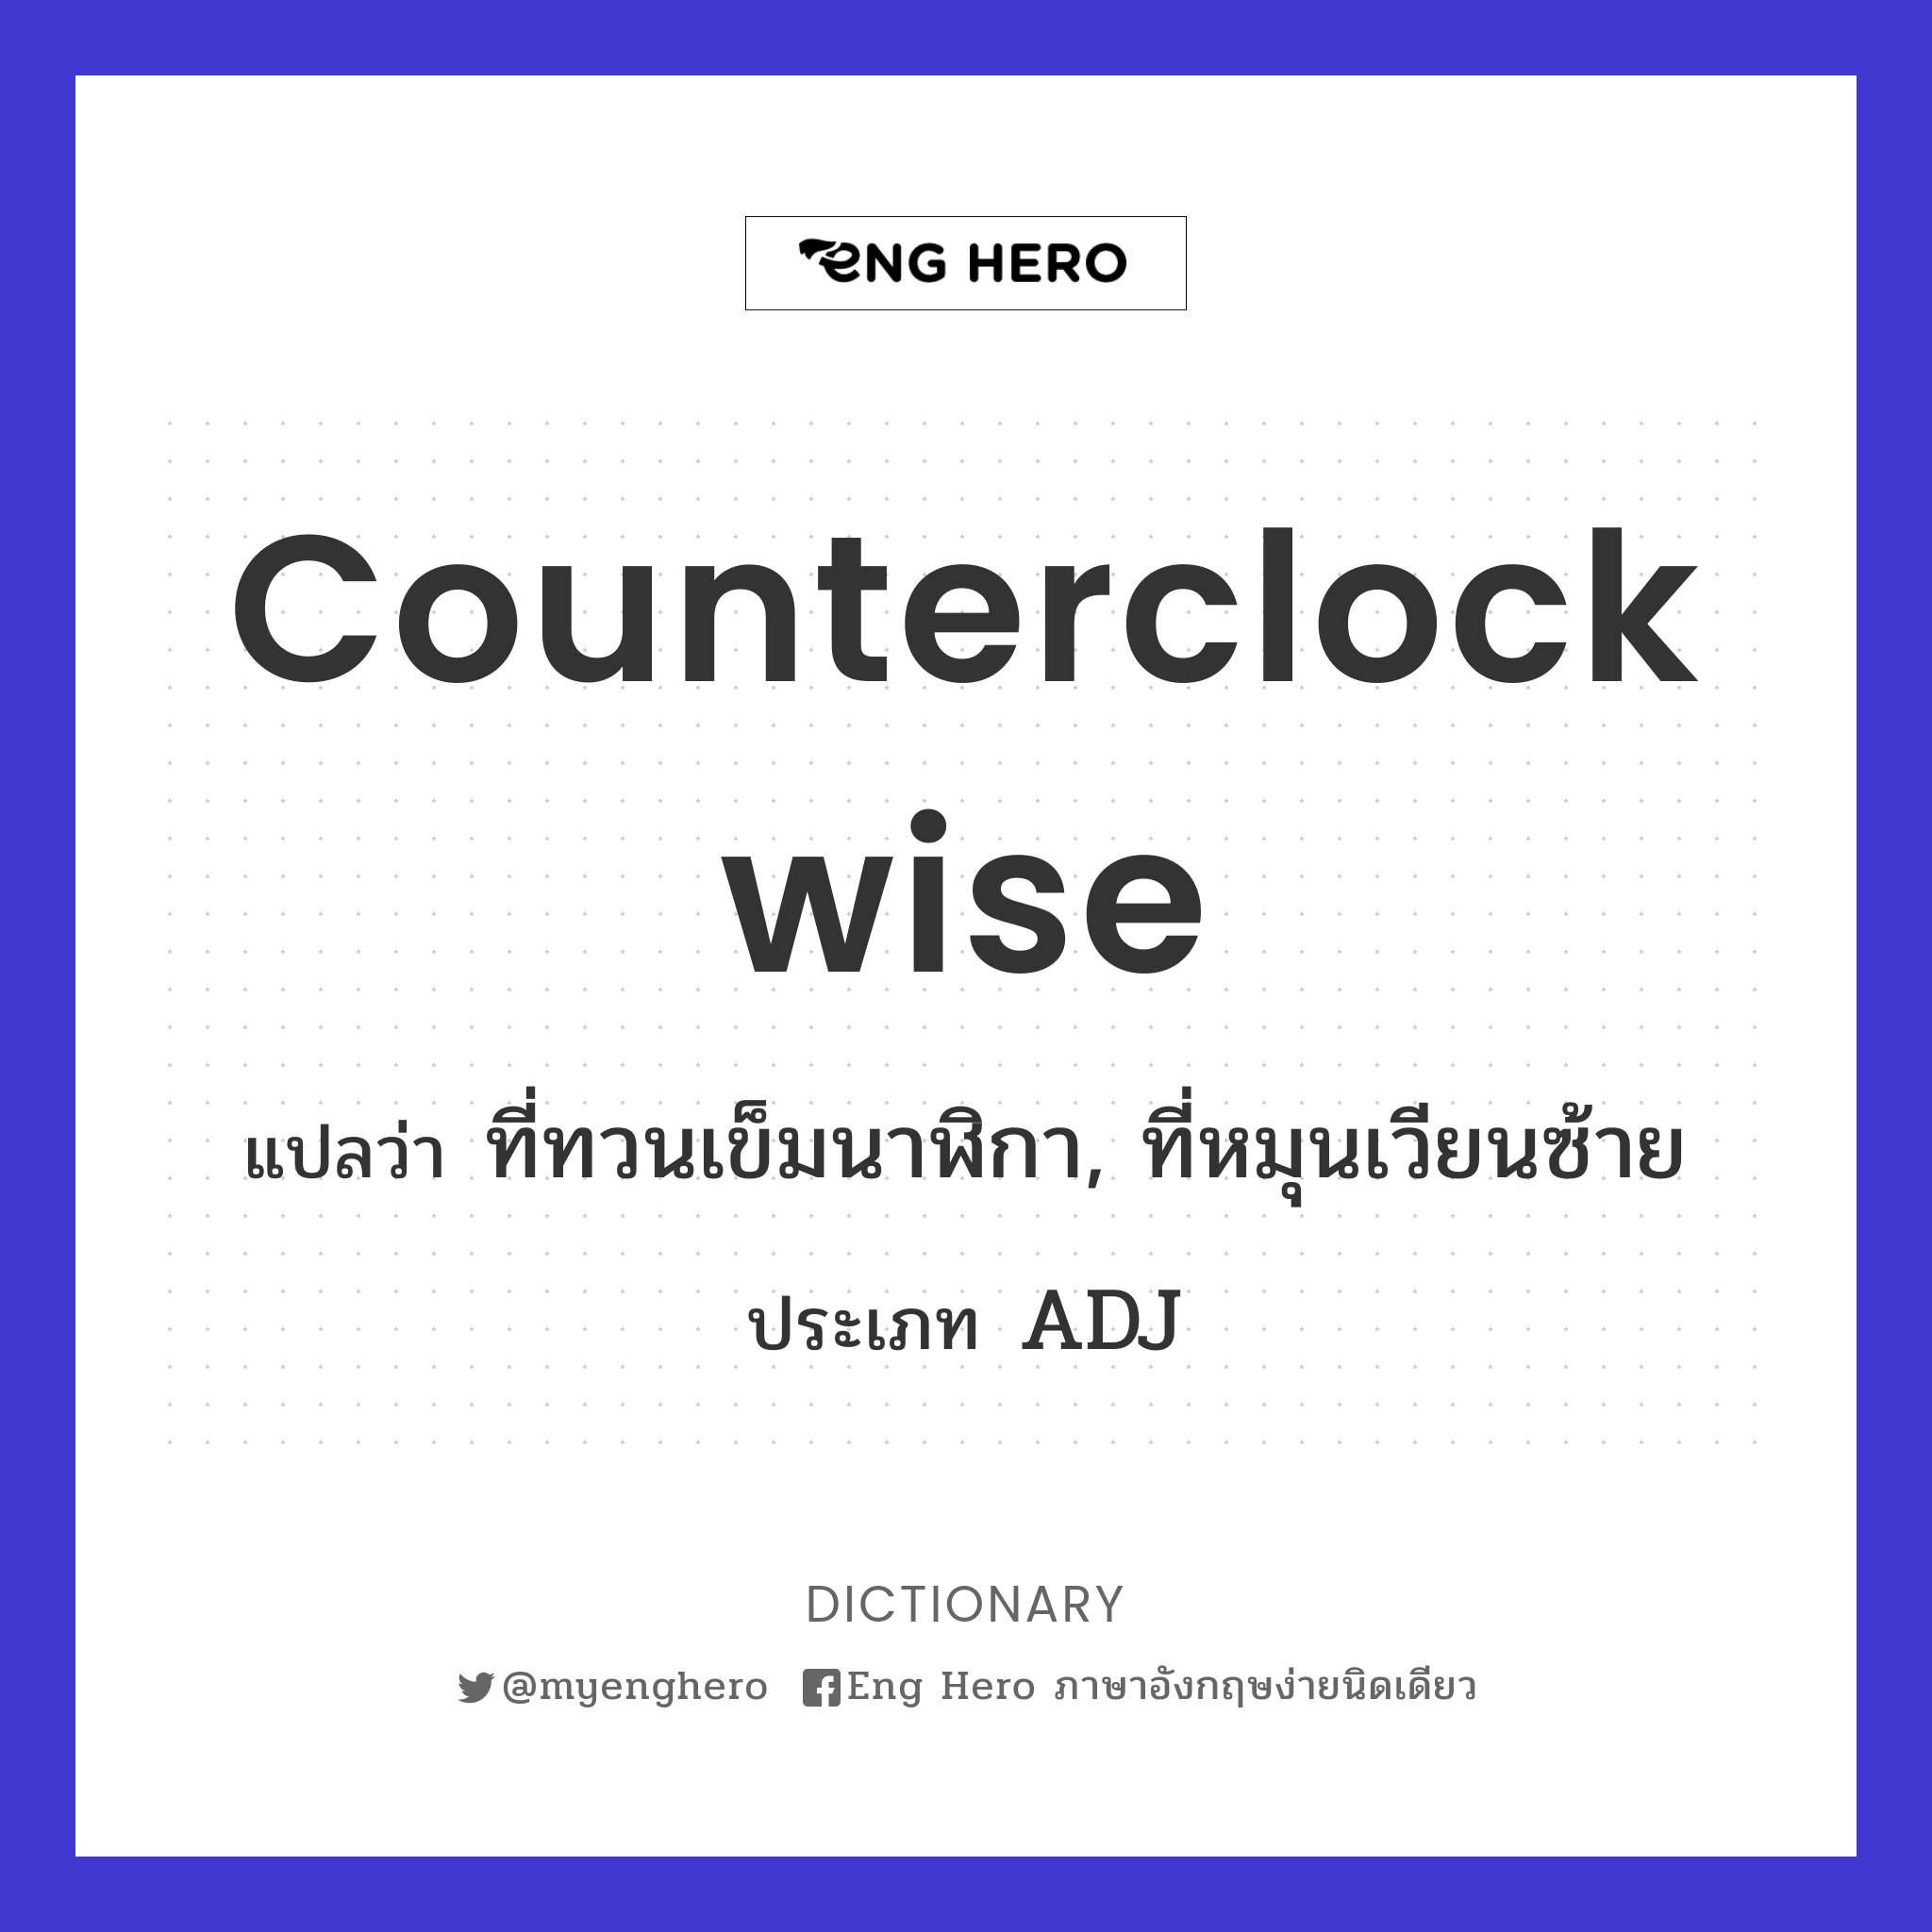 counterclockwise